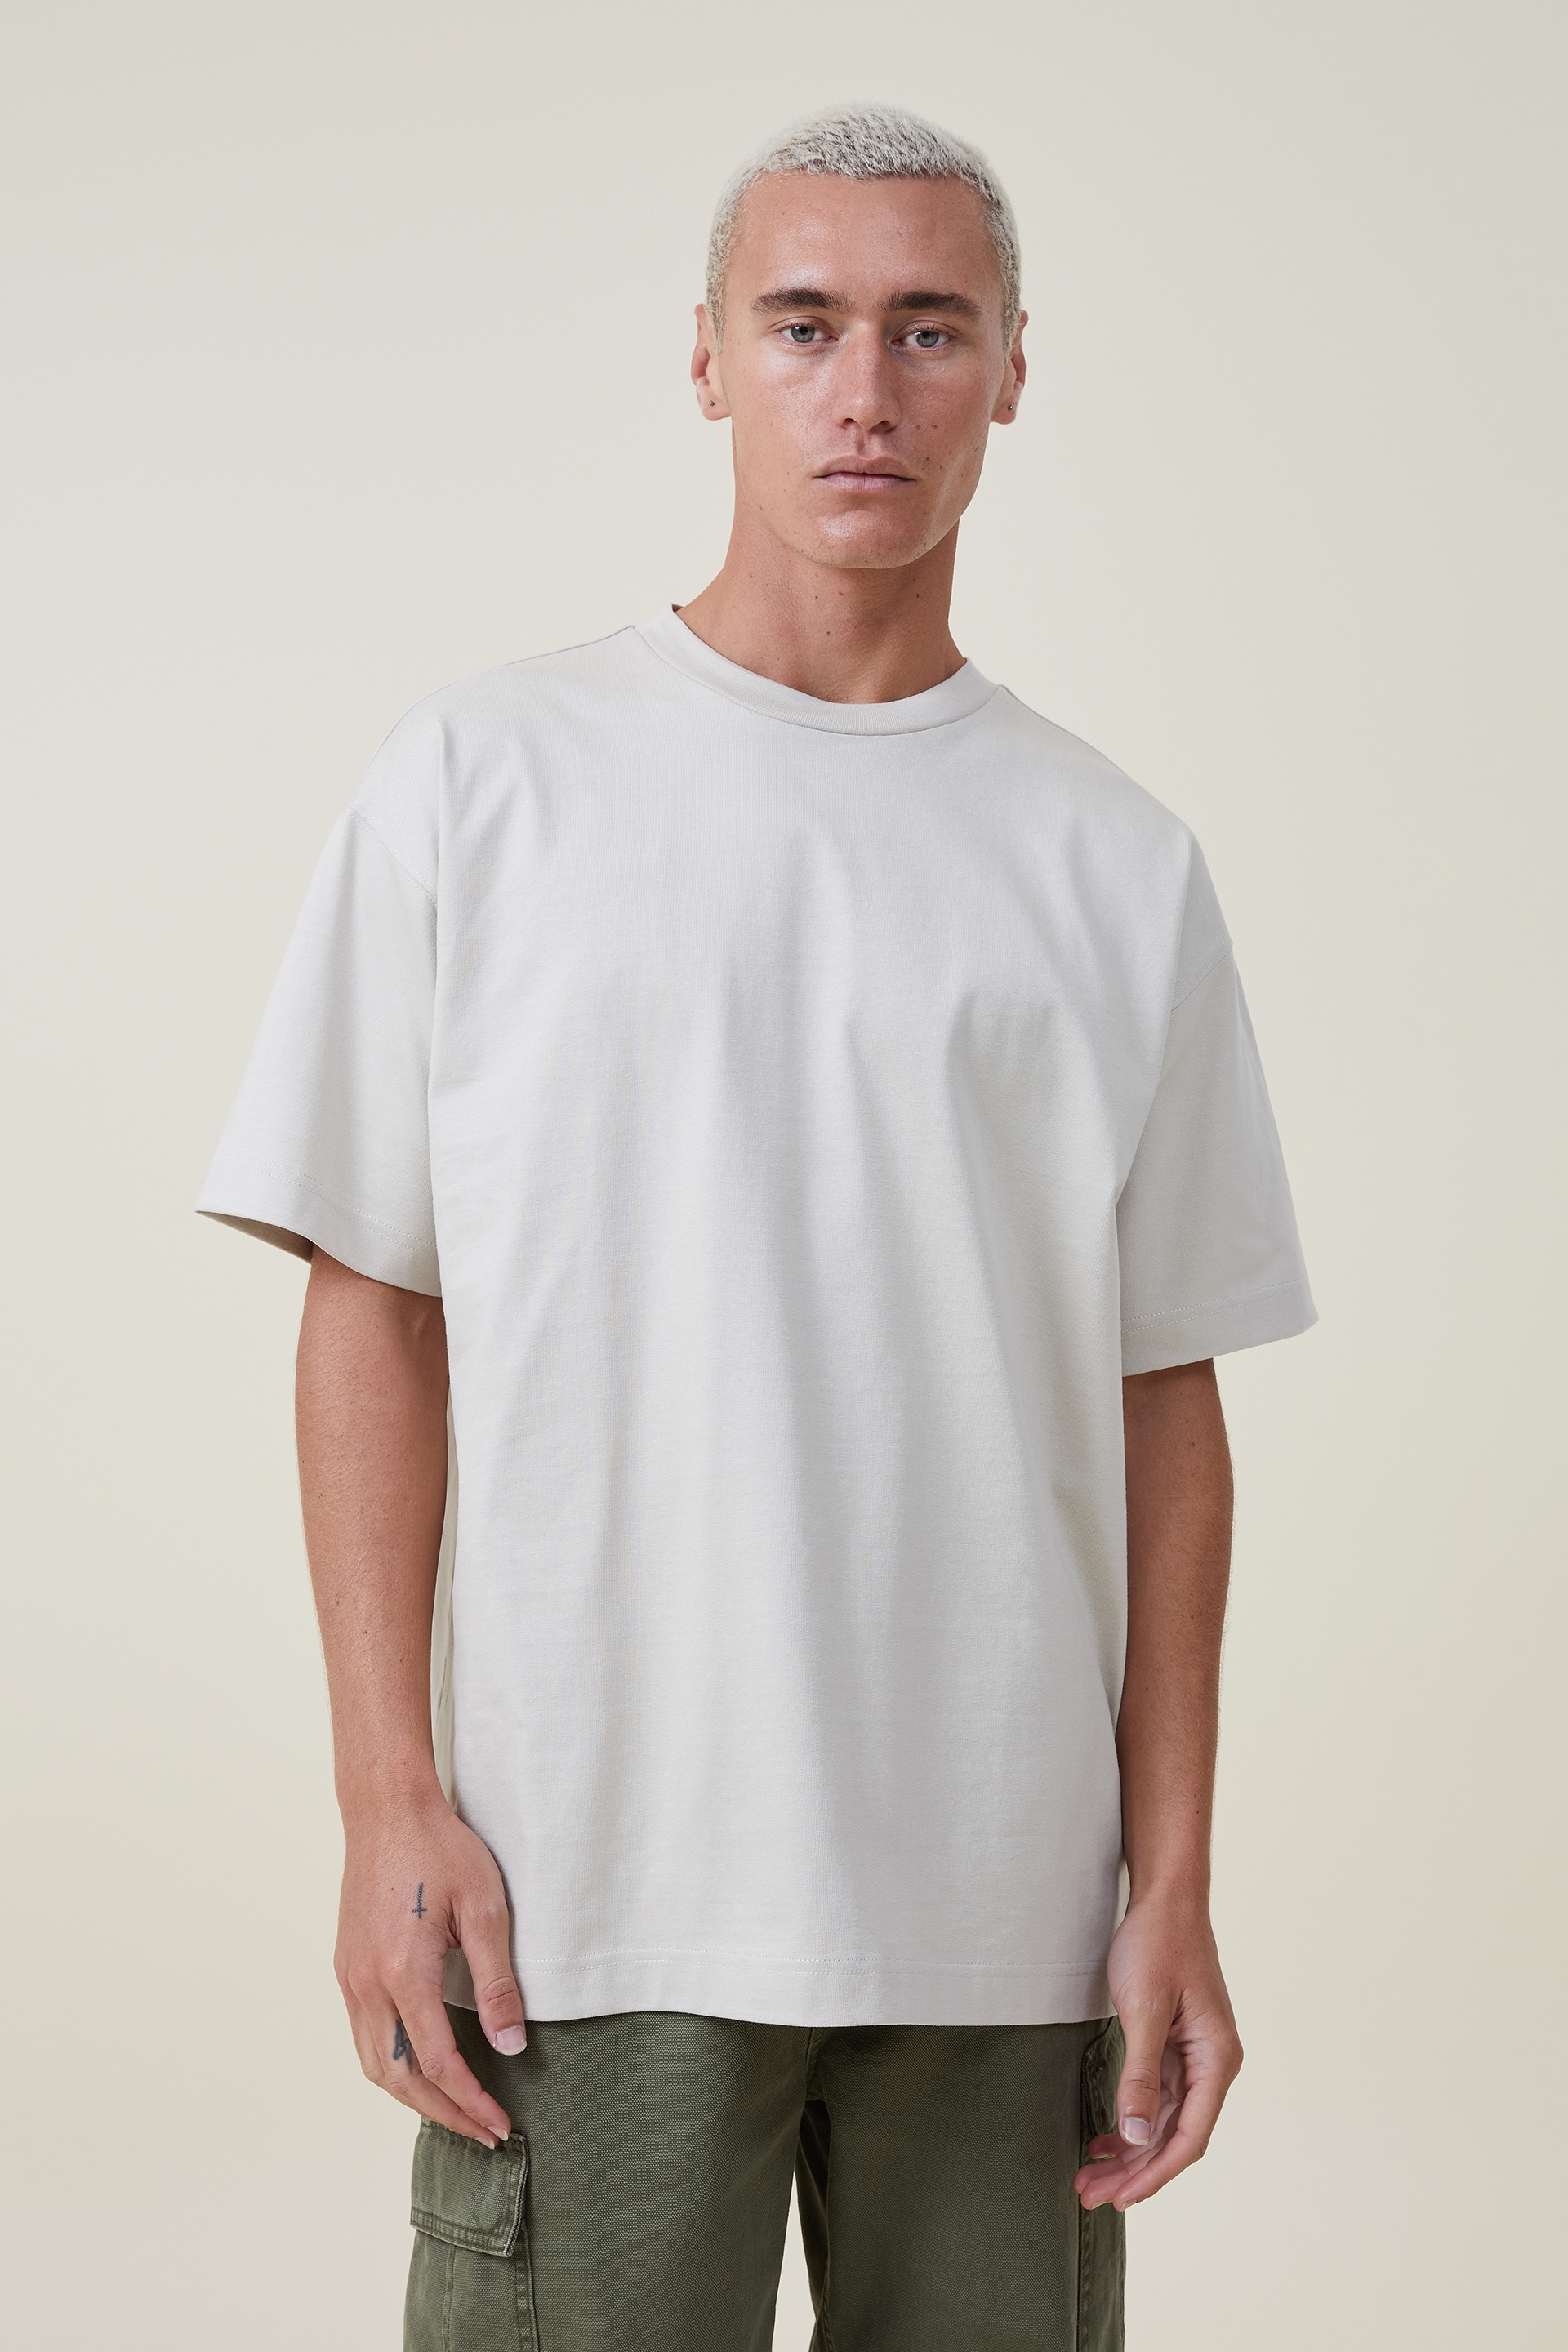 Cotton On Men - Box Fit Plain T-Shirt - Ivory